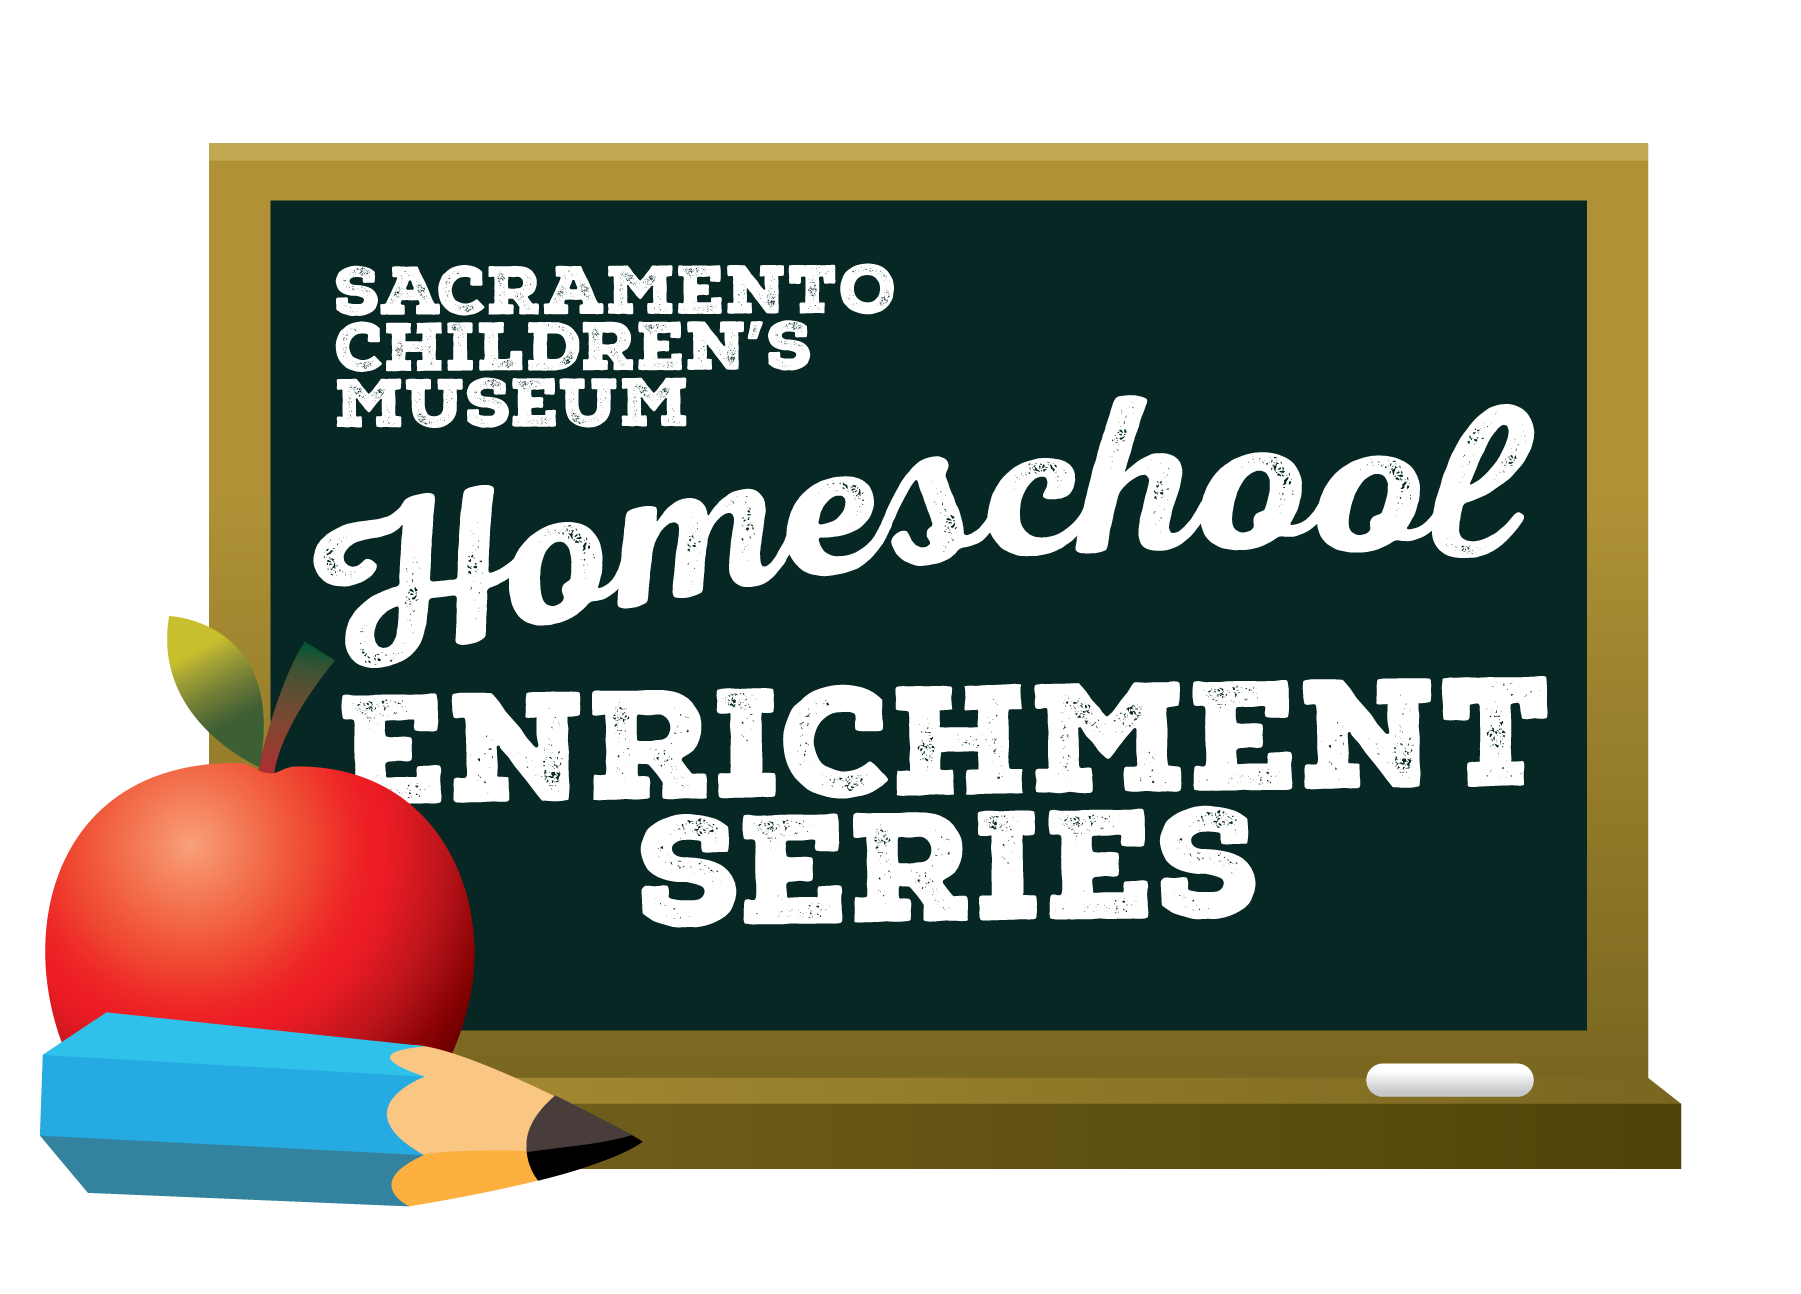 Homeschool Enrichment Series